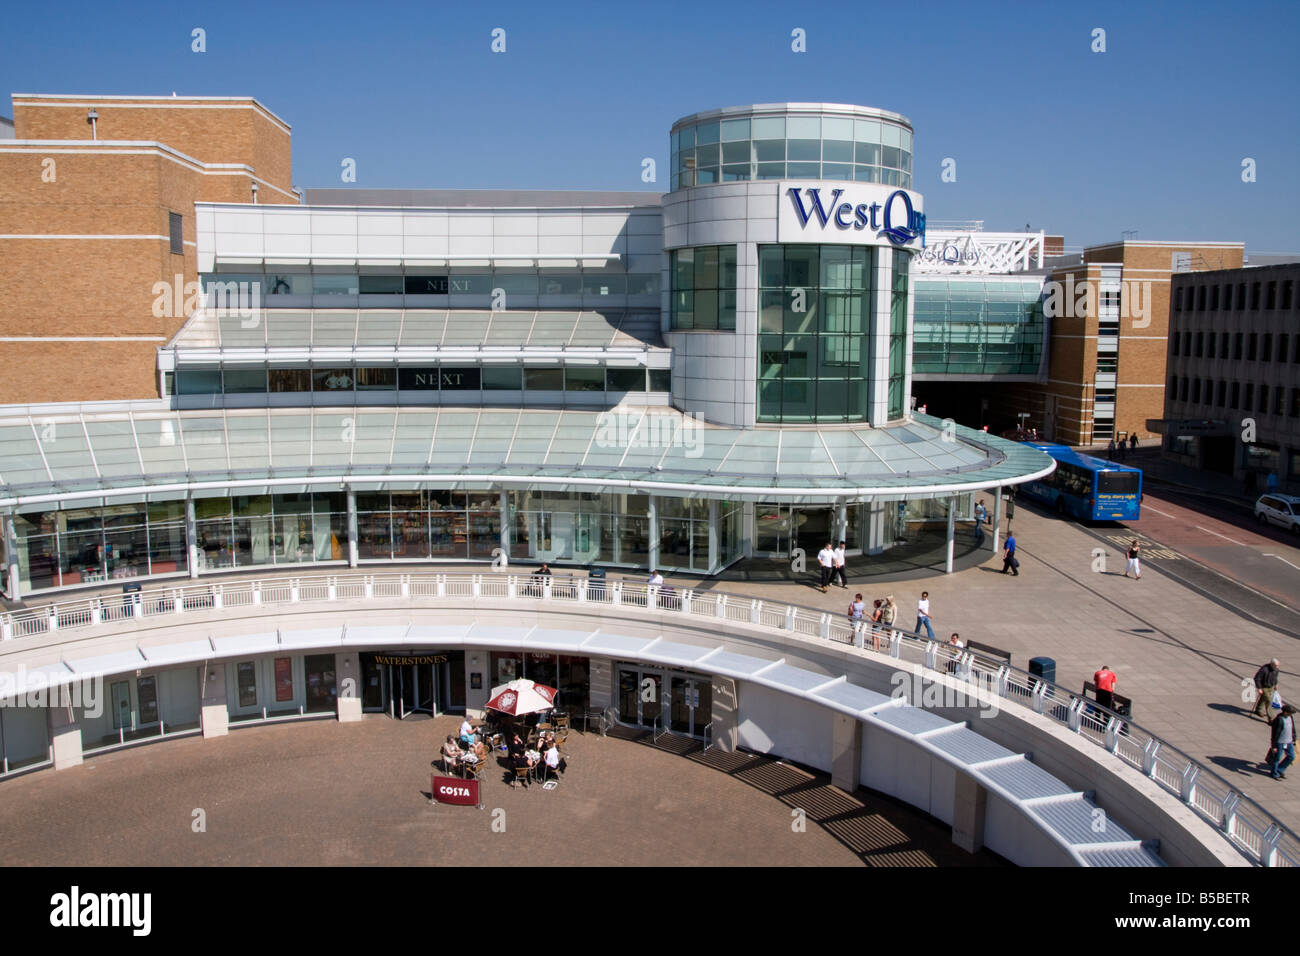 West Quay Shopping Centre, Southampton, Hampshire, England, Europe Stock Photo